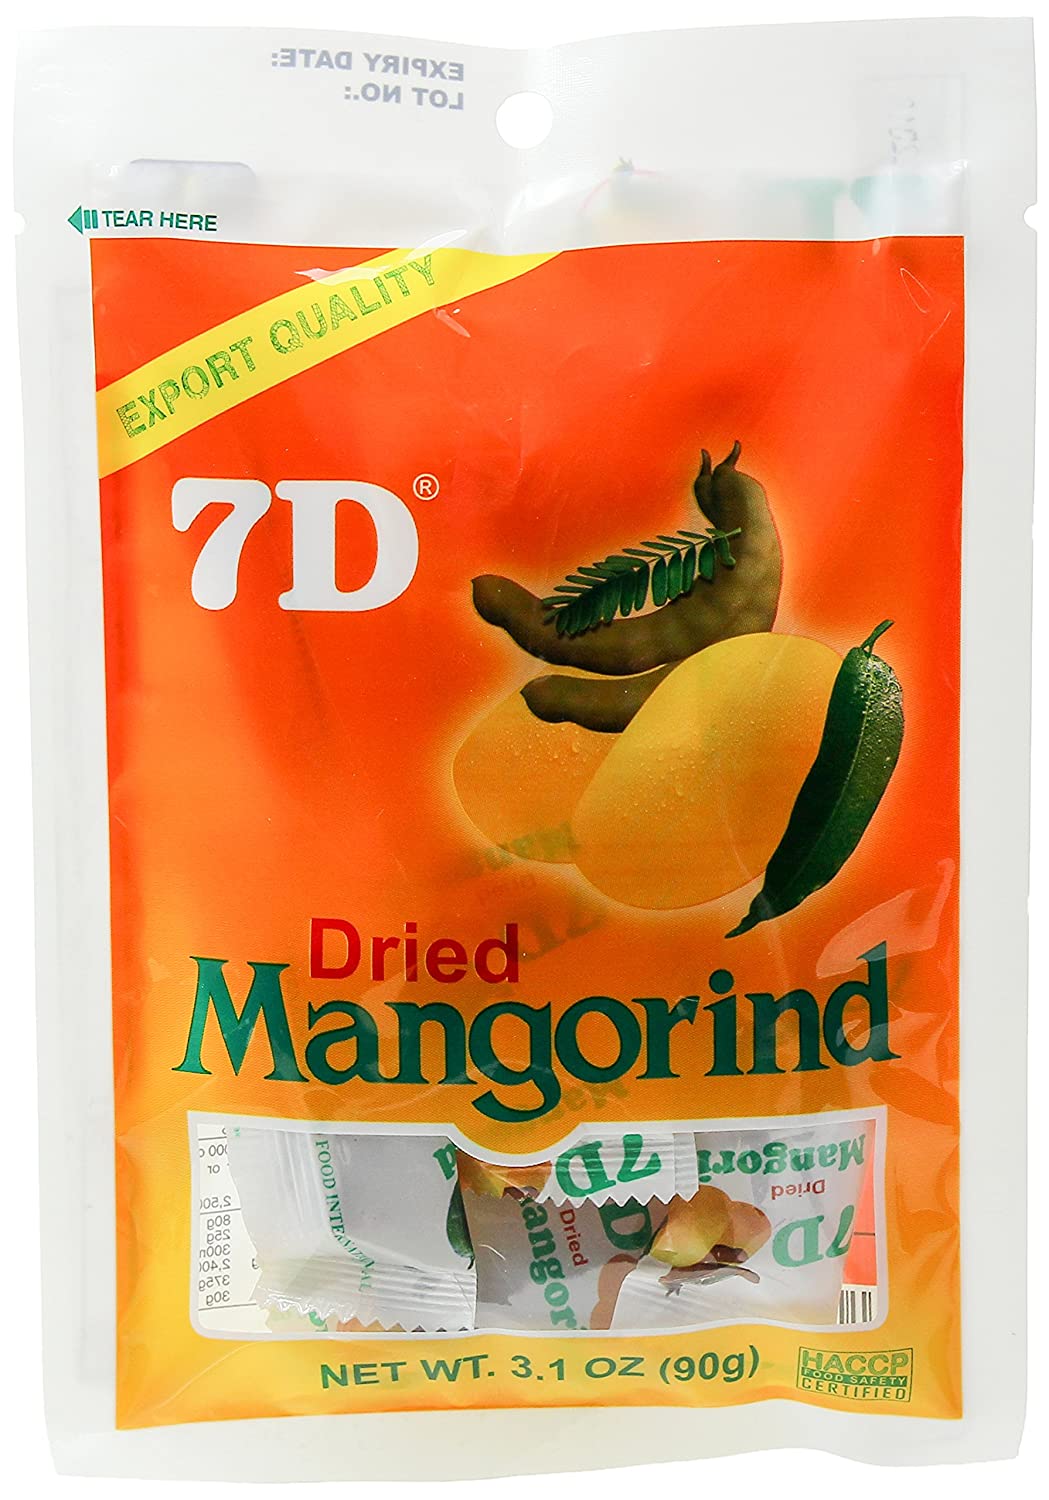 7D DRIED MANGORIND